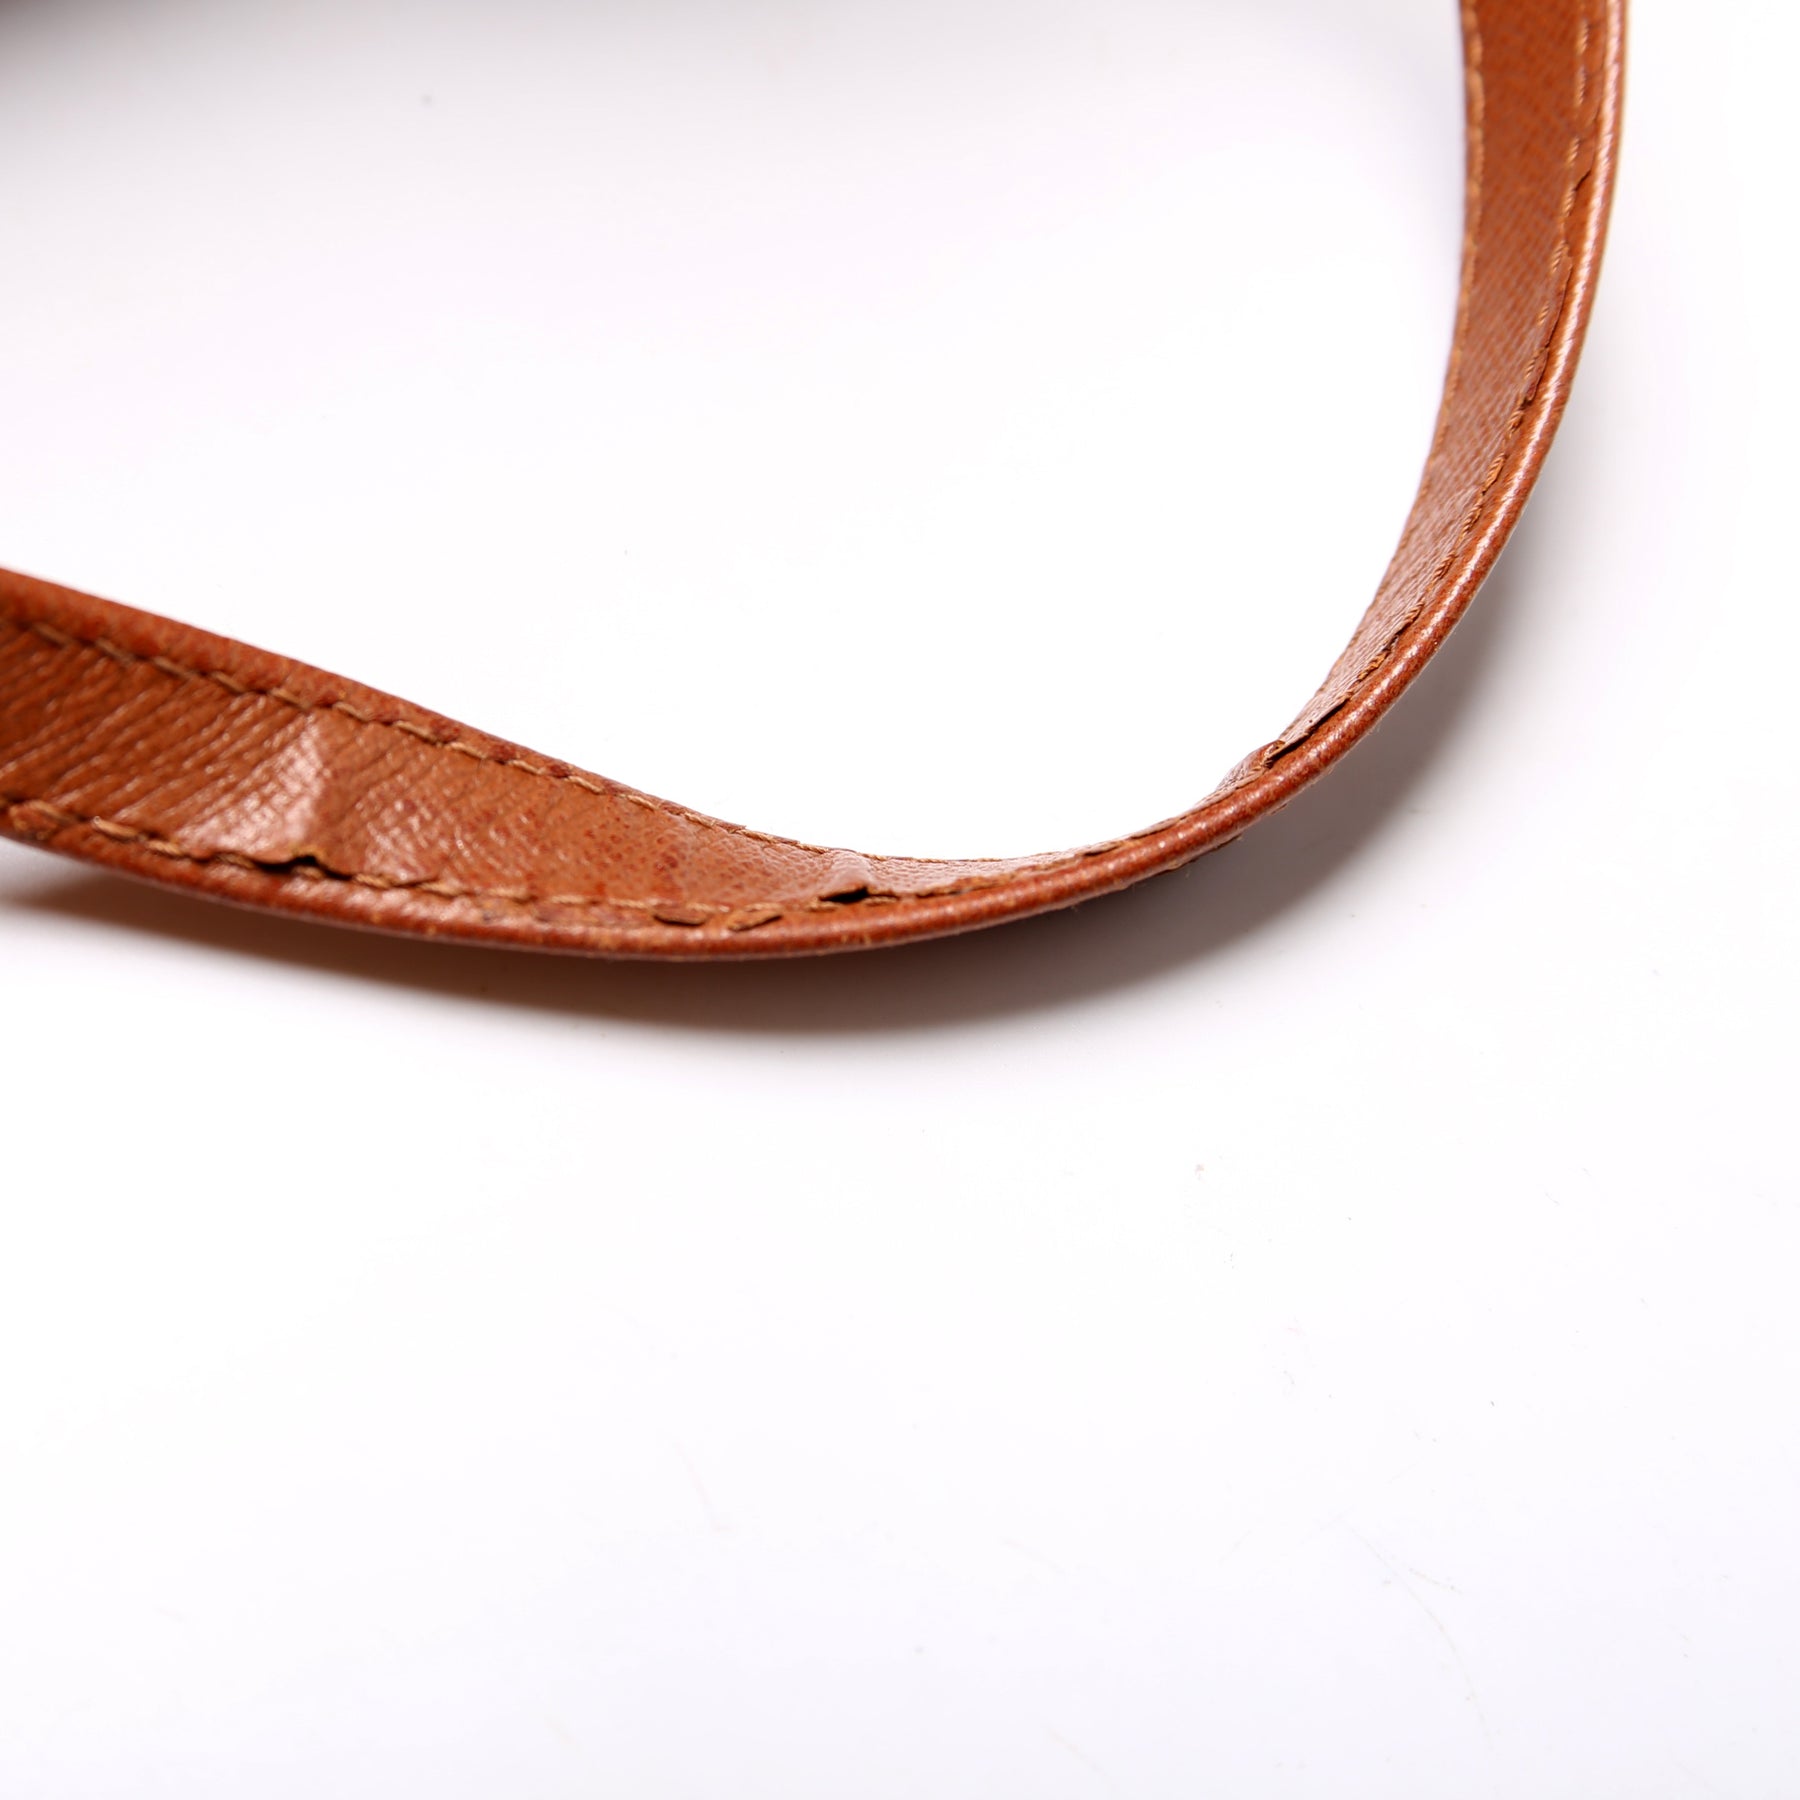 Papillon 30 10.5 w/Pouch Monogram – Keeks Designer Handbags